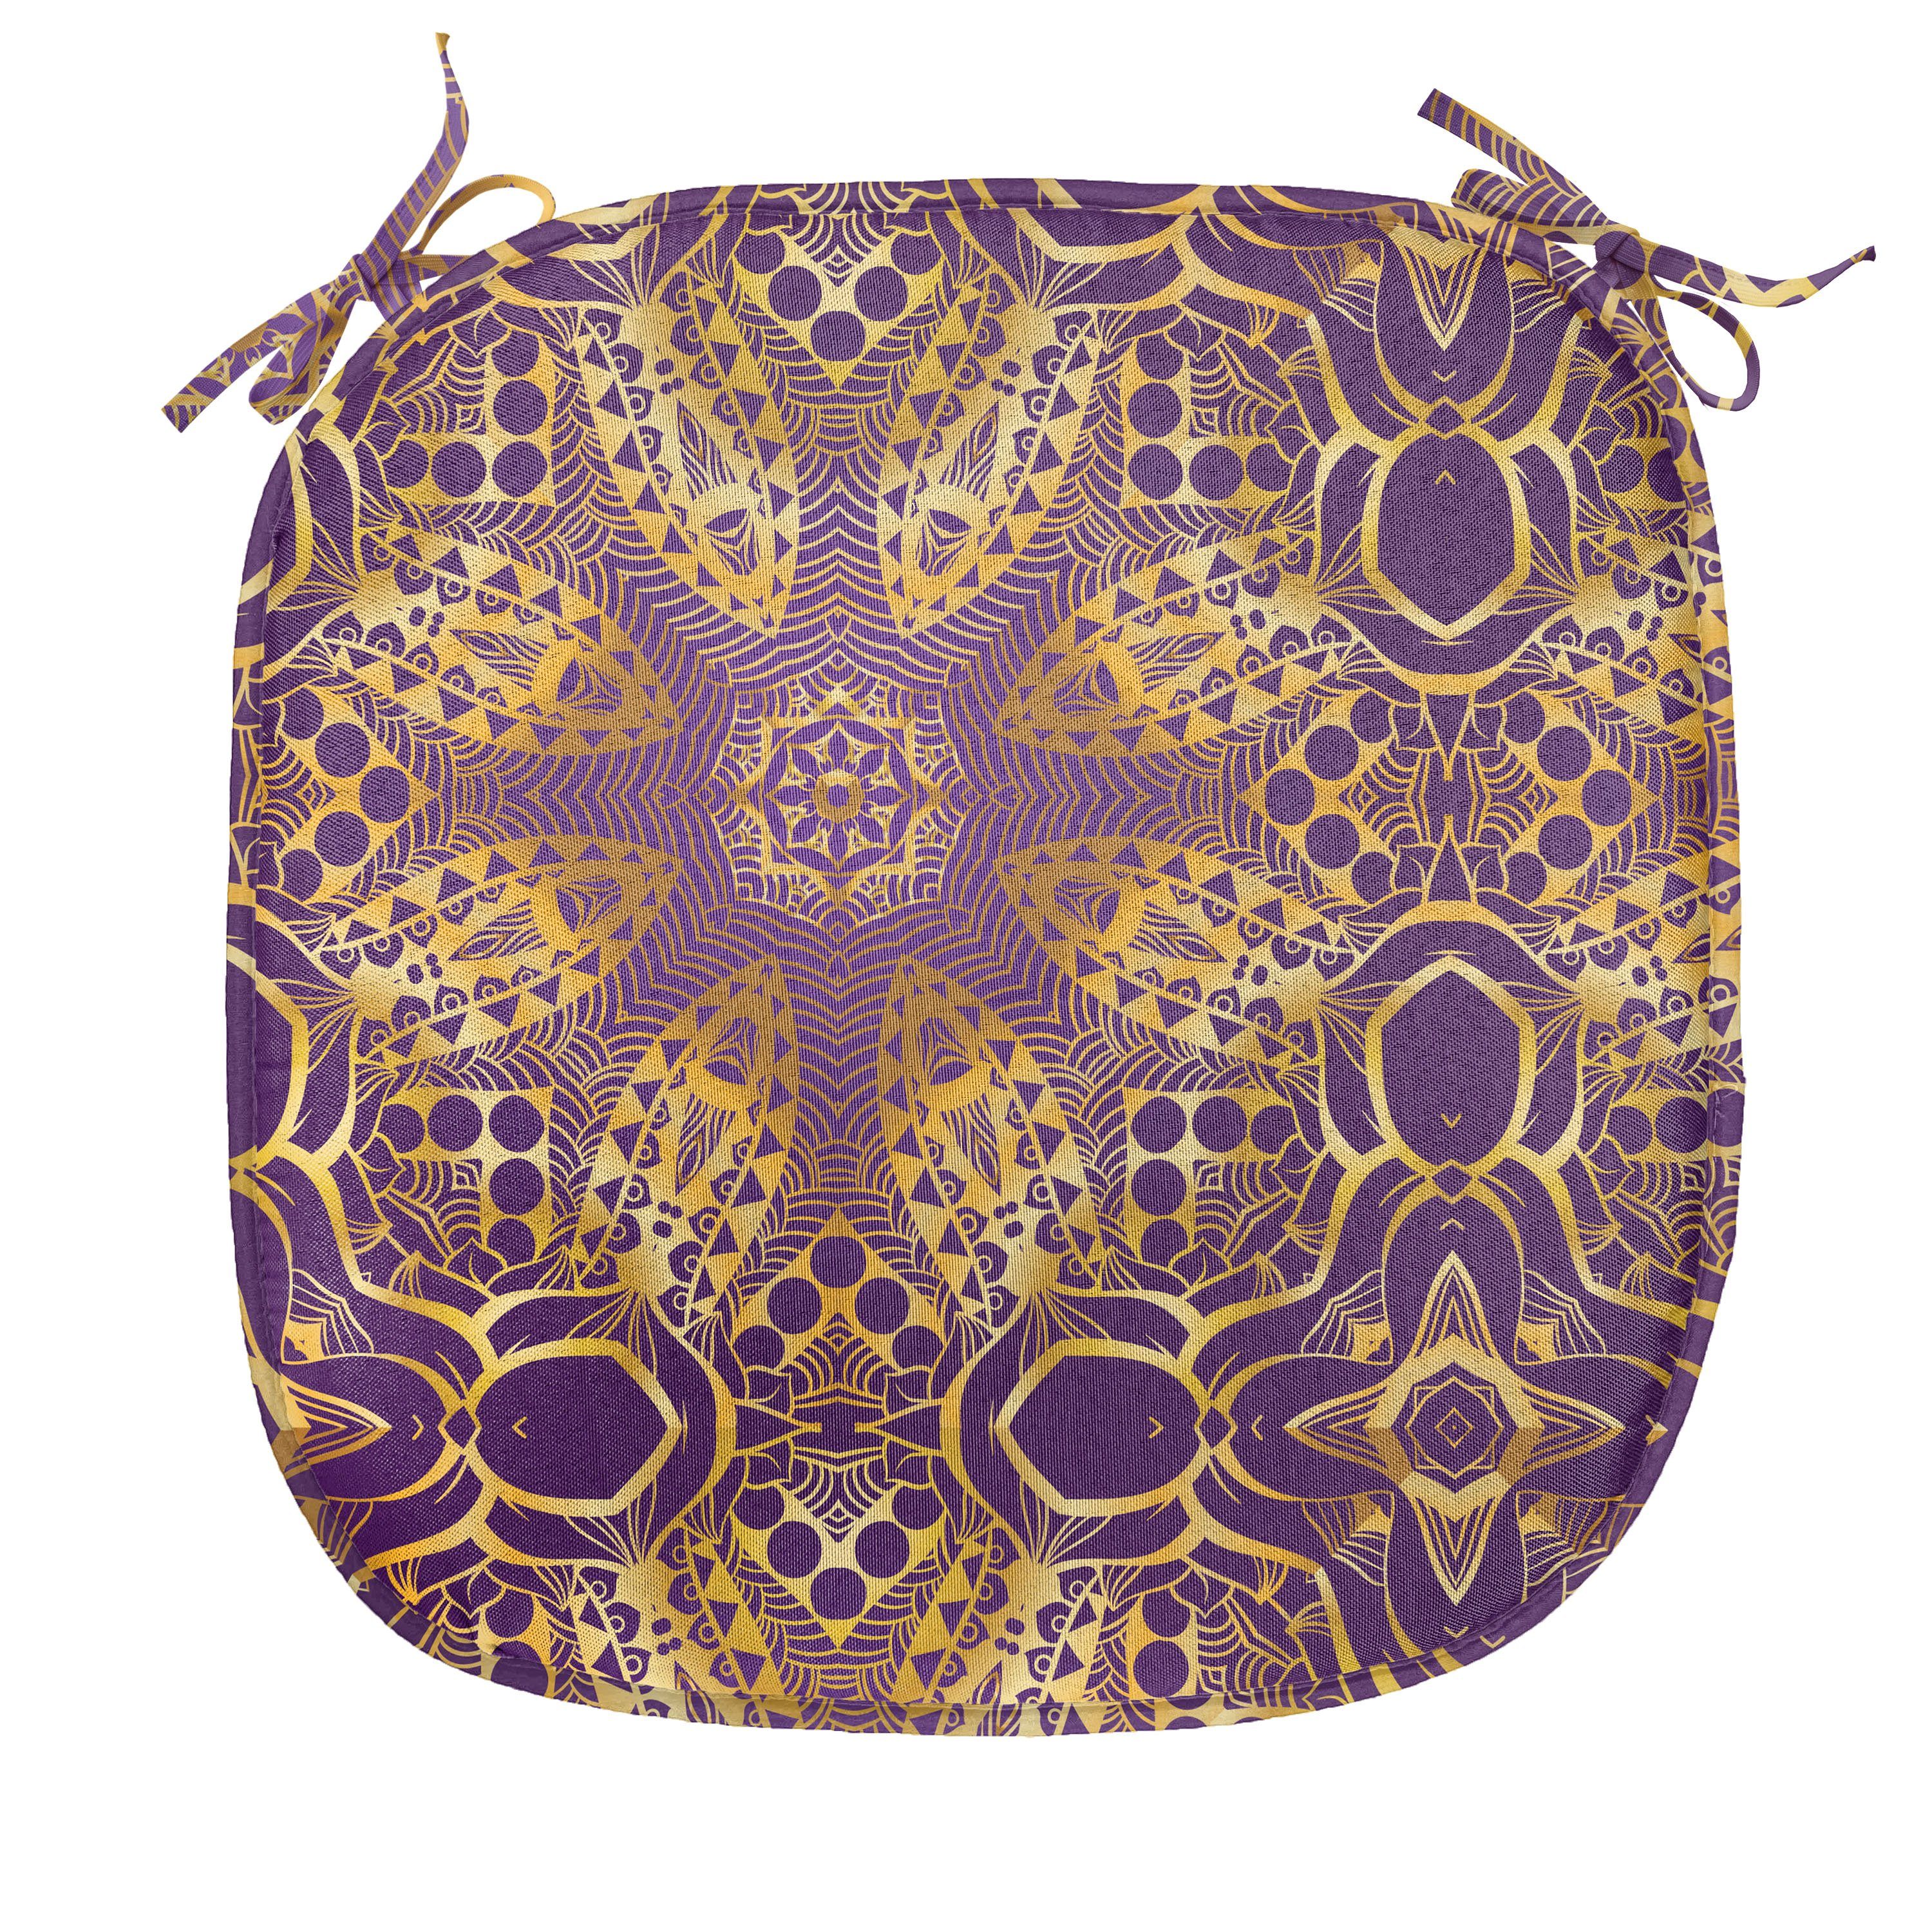 Abakuhaus Stuhlkissen für Kissen Riemen Dekoratives Mandala wasserfestes lila Küchensitze, Boho-Motiv mit